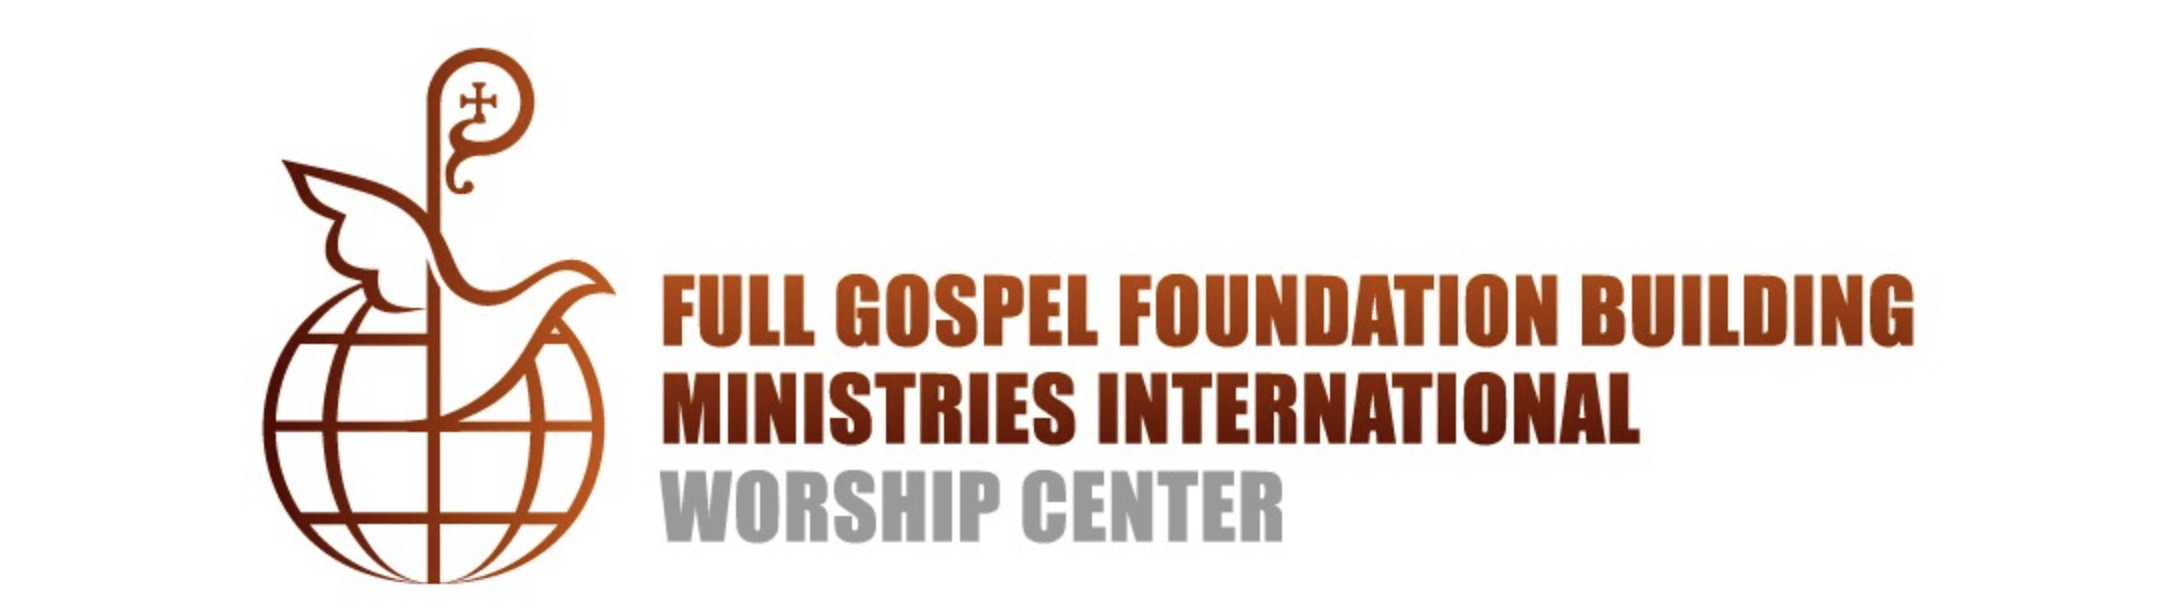 Full Gospel Foundation Building Ministries International Worship Center